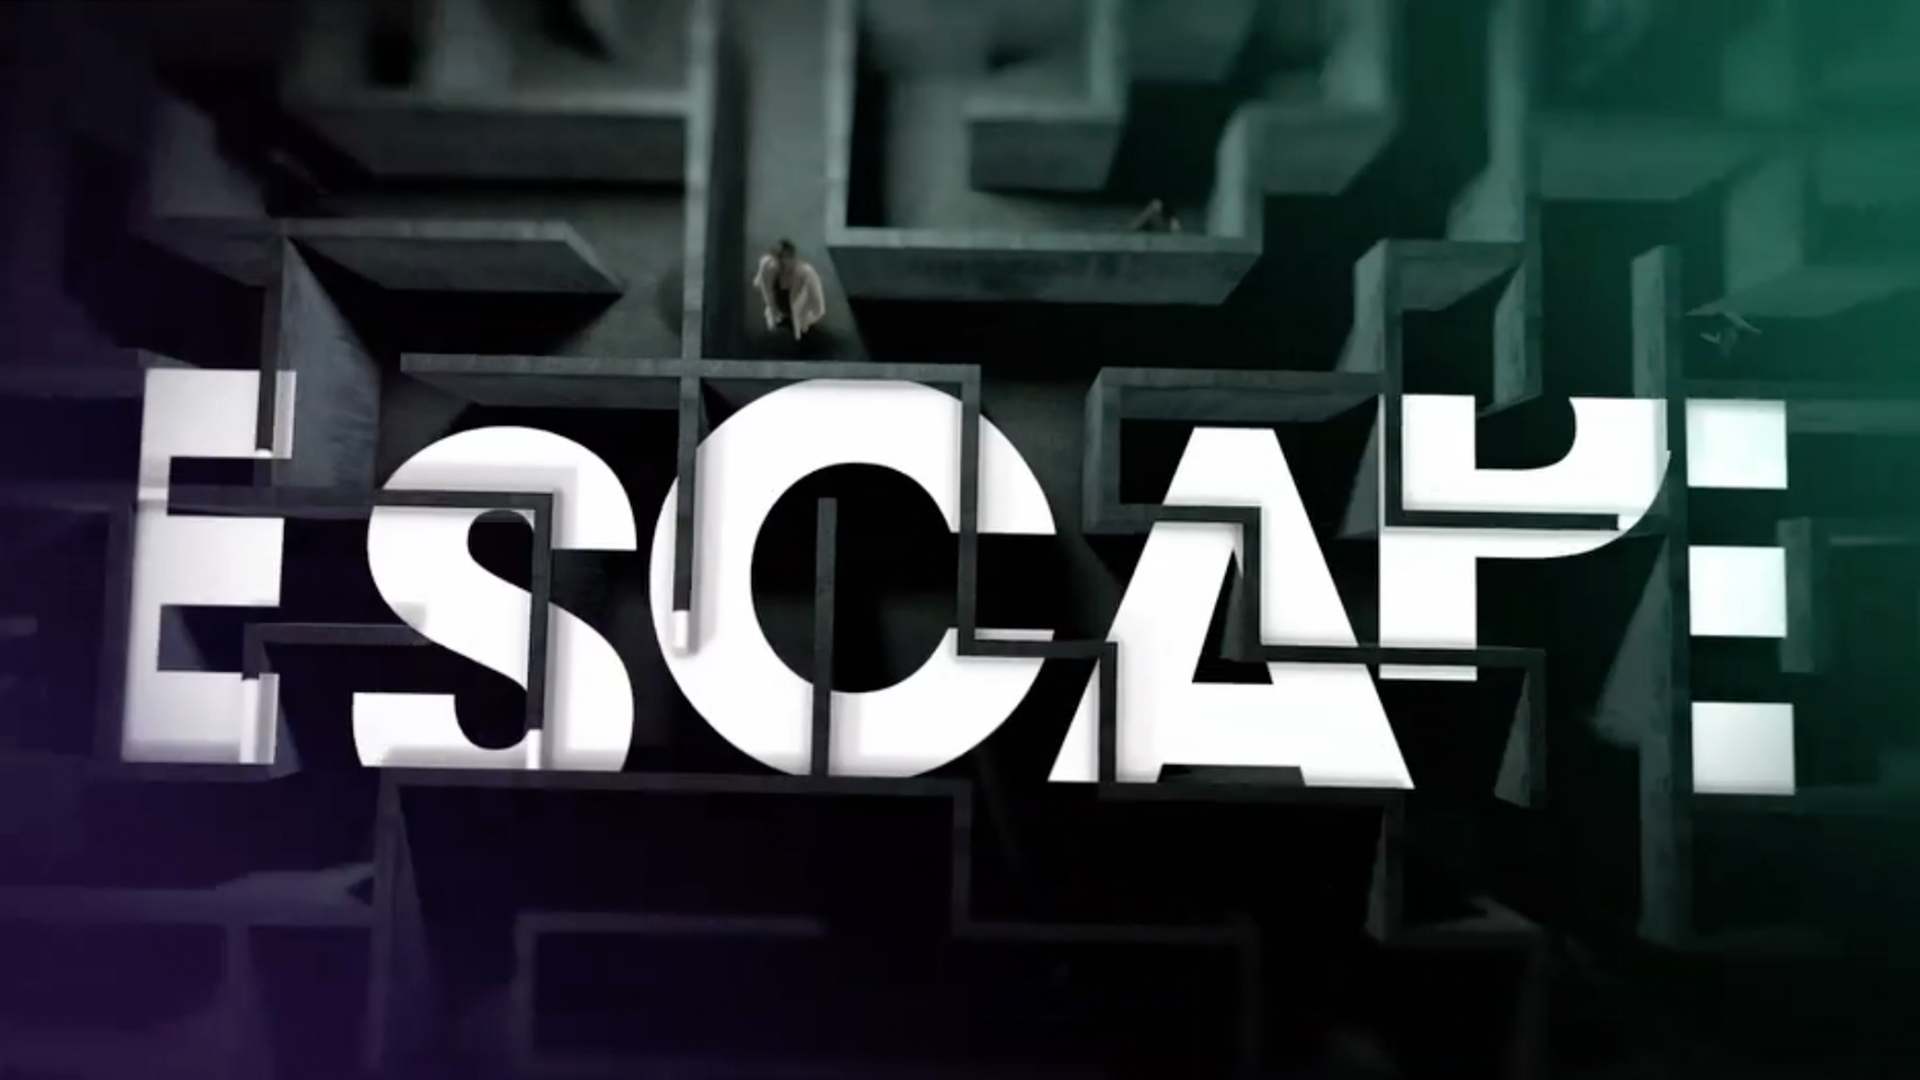 Escape TV Show Promo image on a maze background